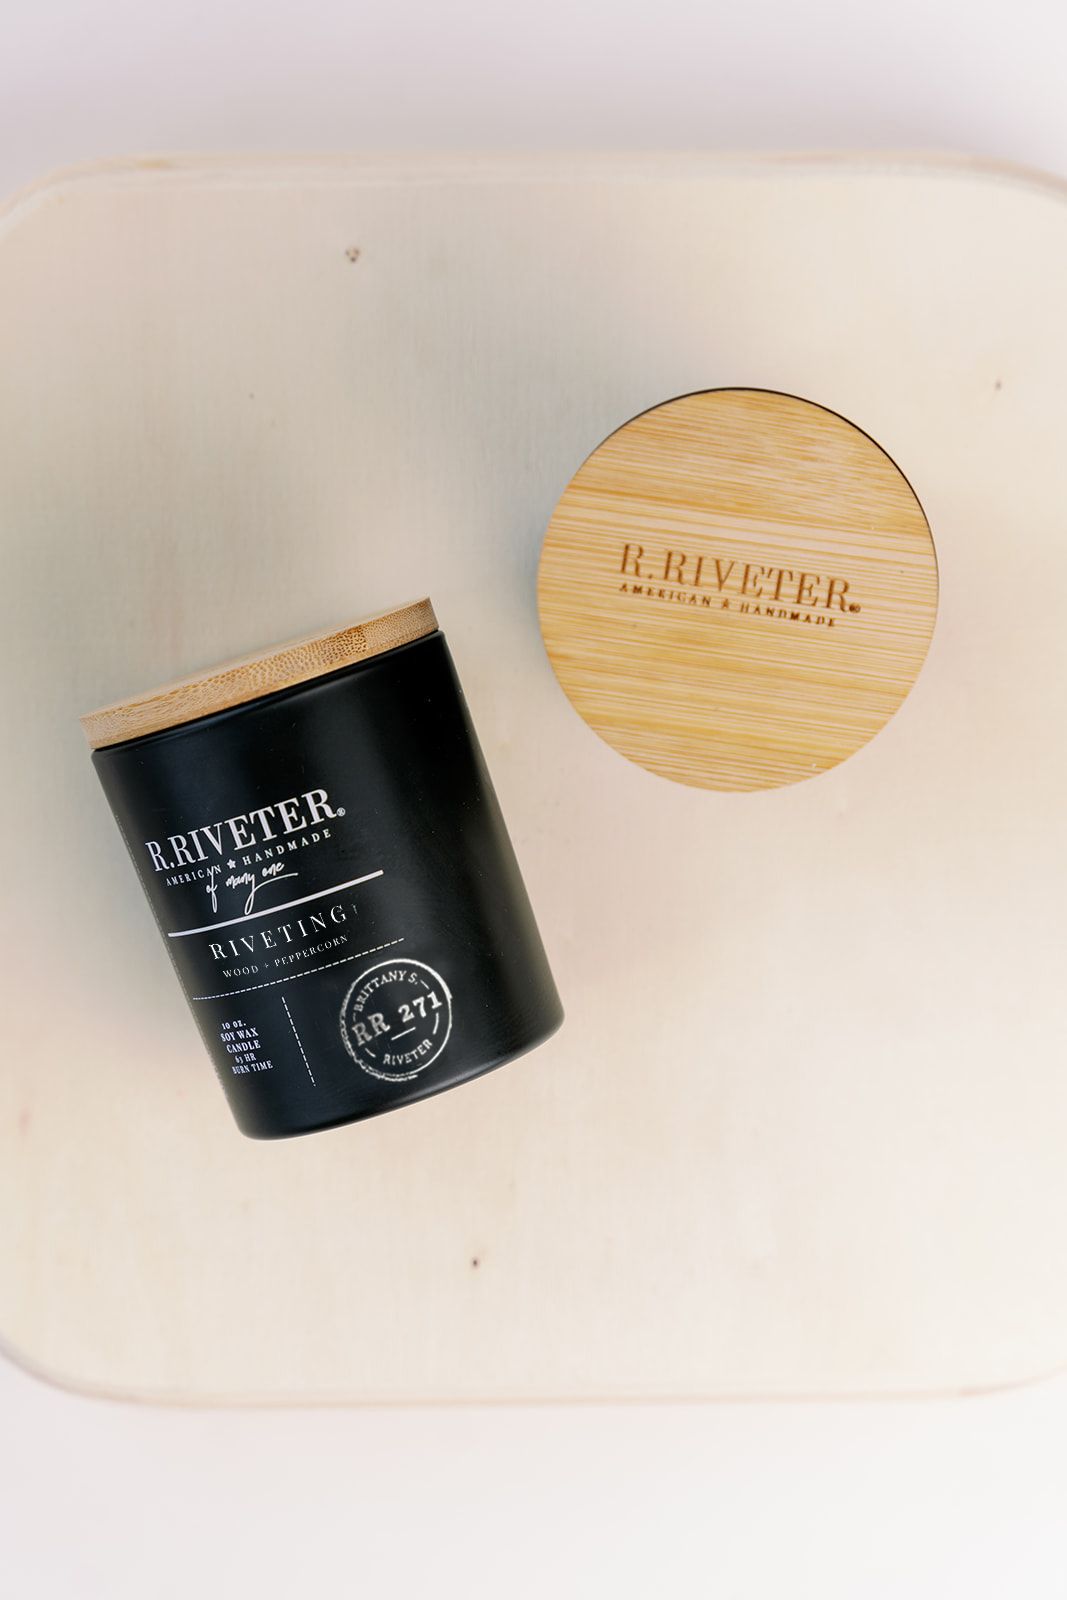 Riveter Made Candle | Riveting - 10oz Black Jar